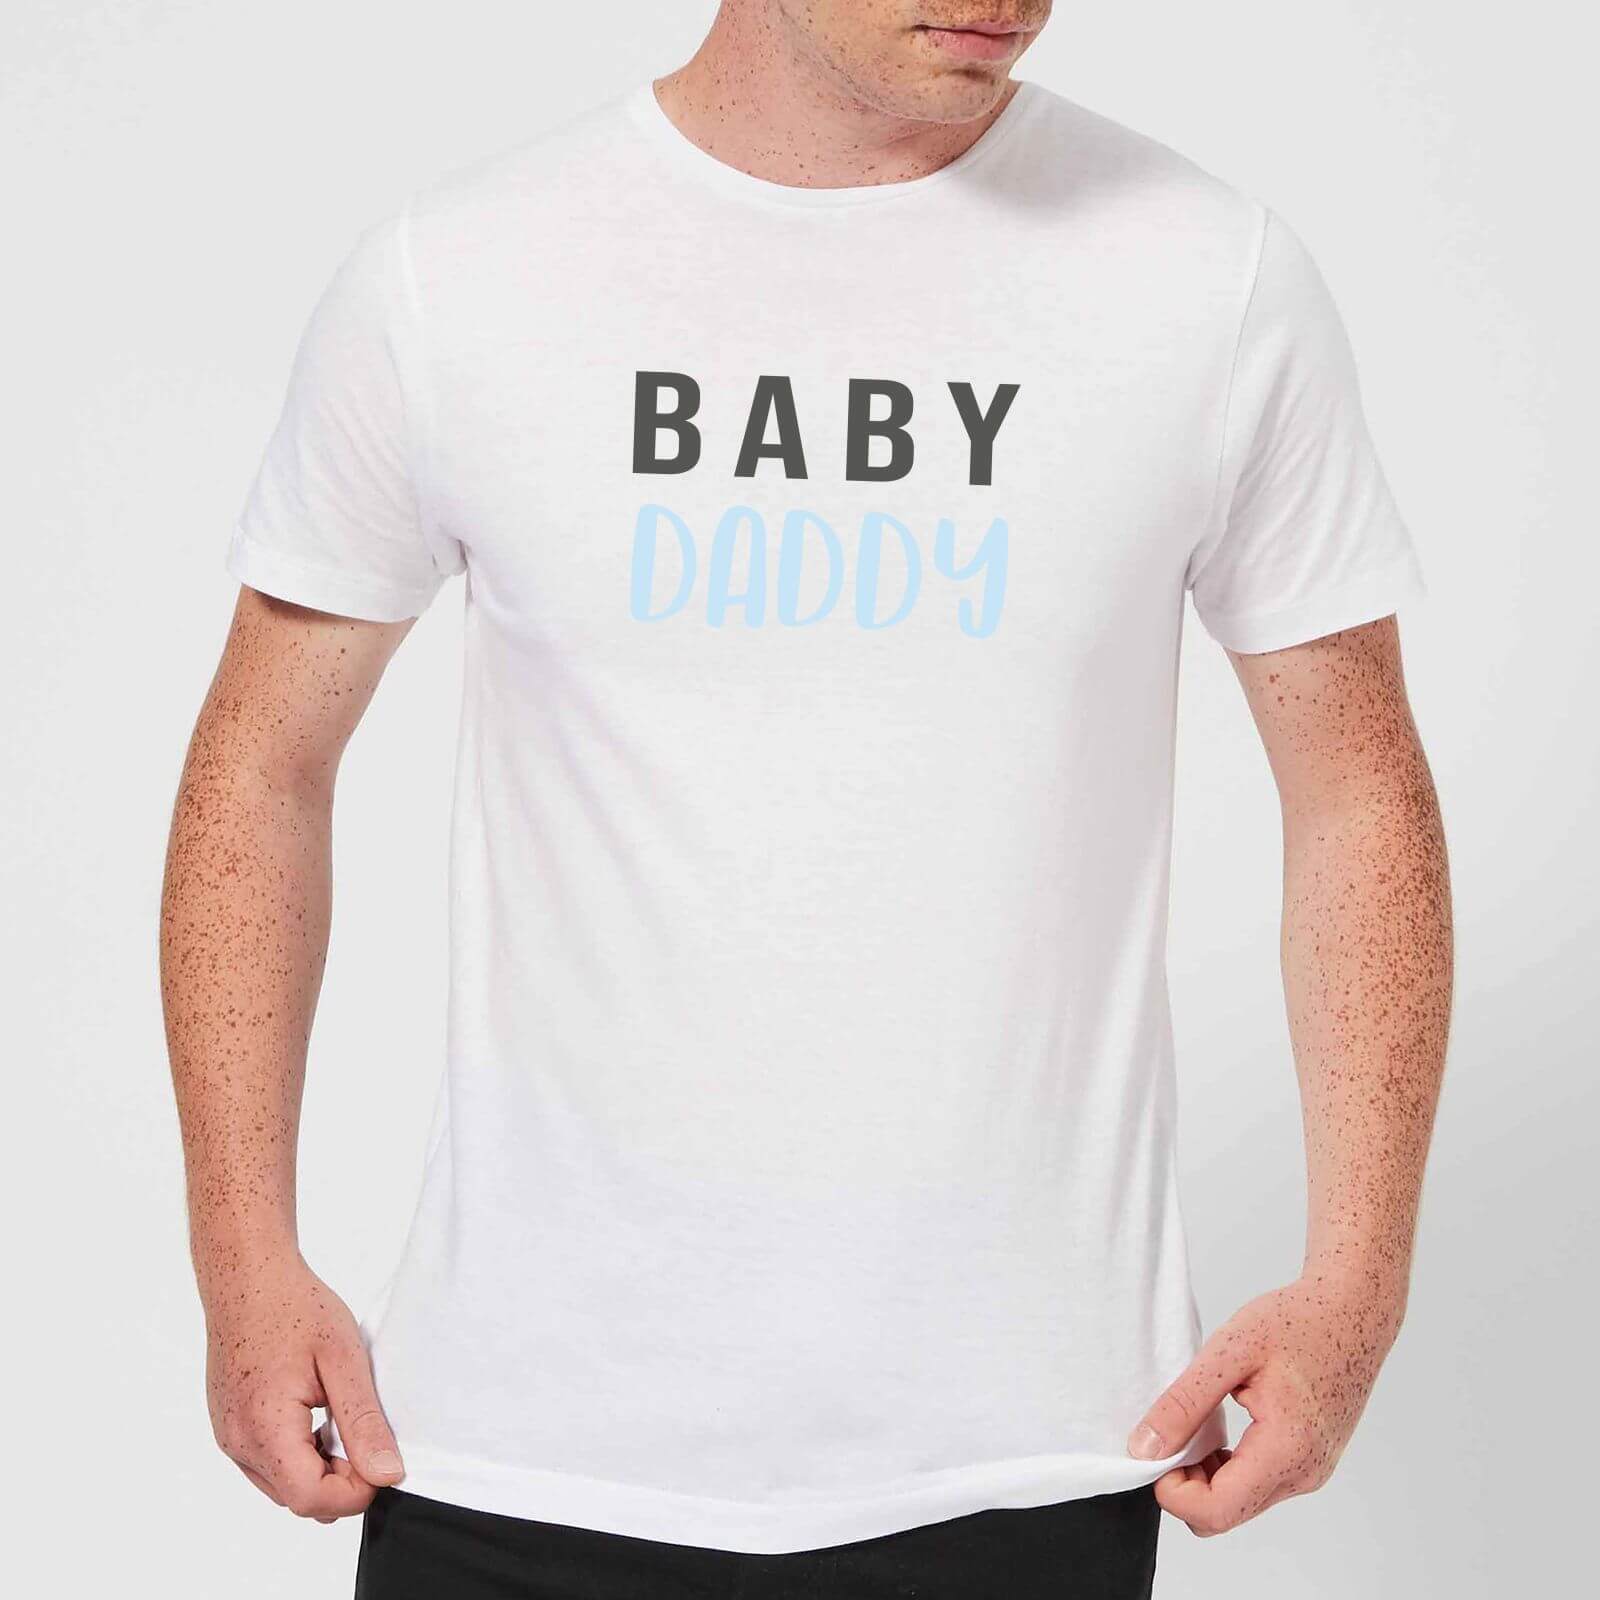 Baby Daddy Men's T-Shirt - White - XL - White